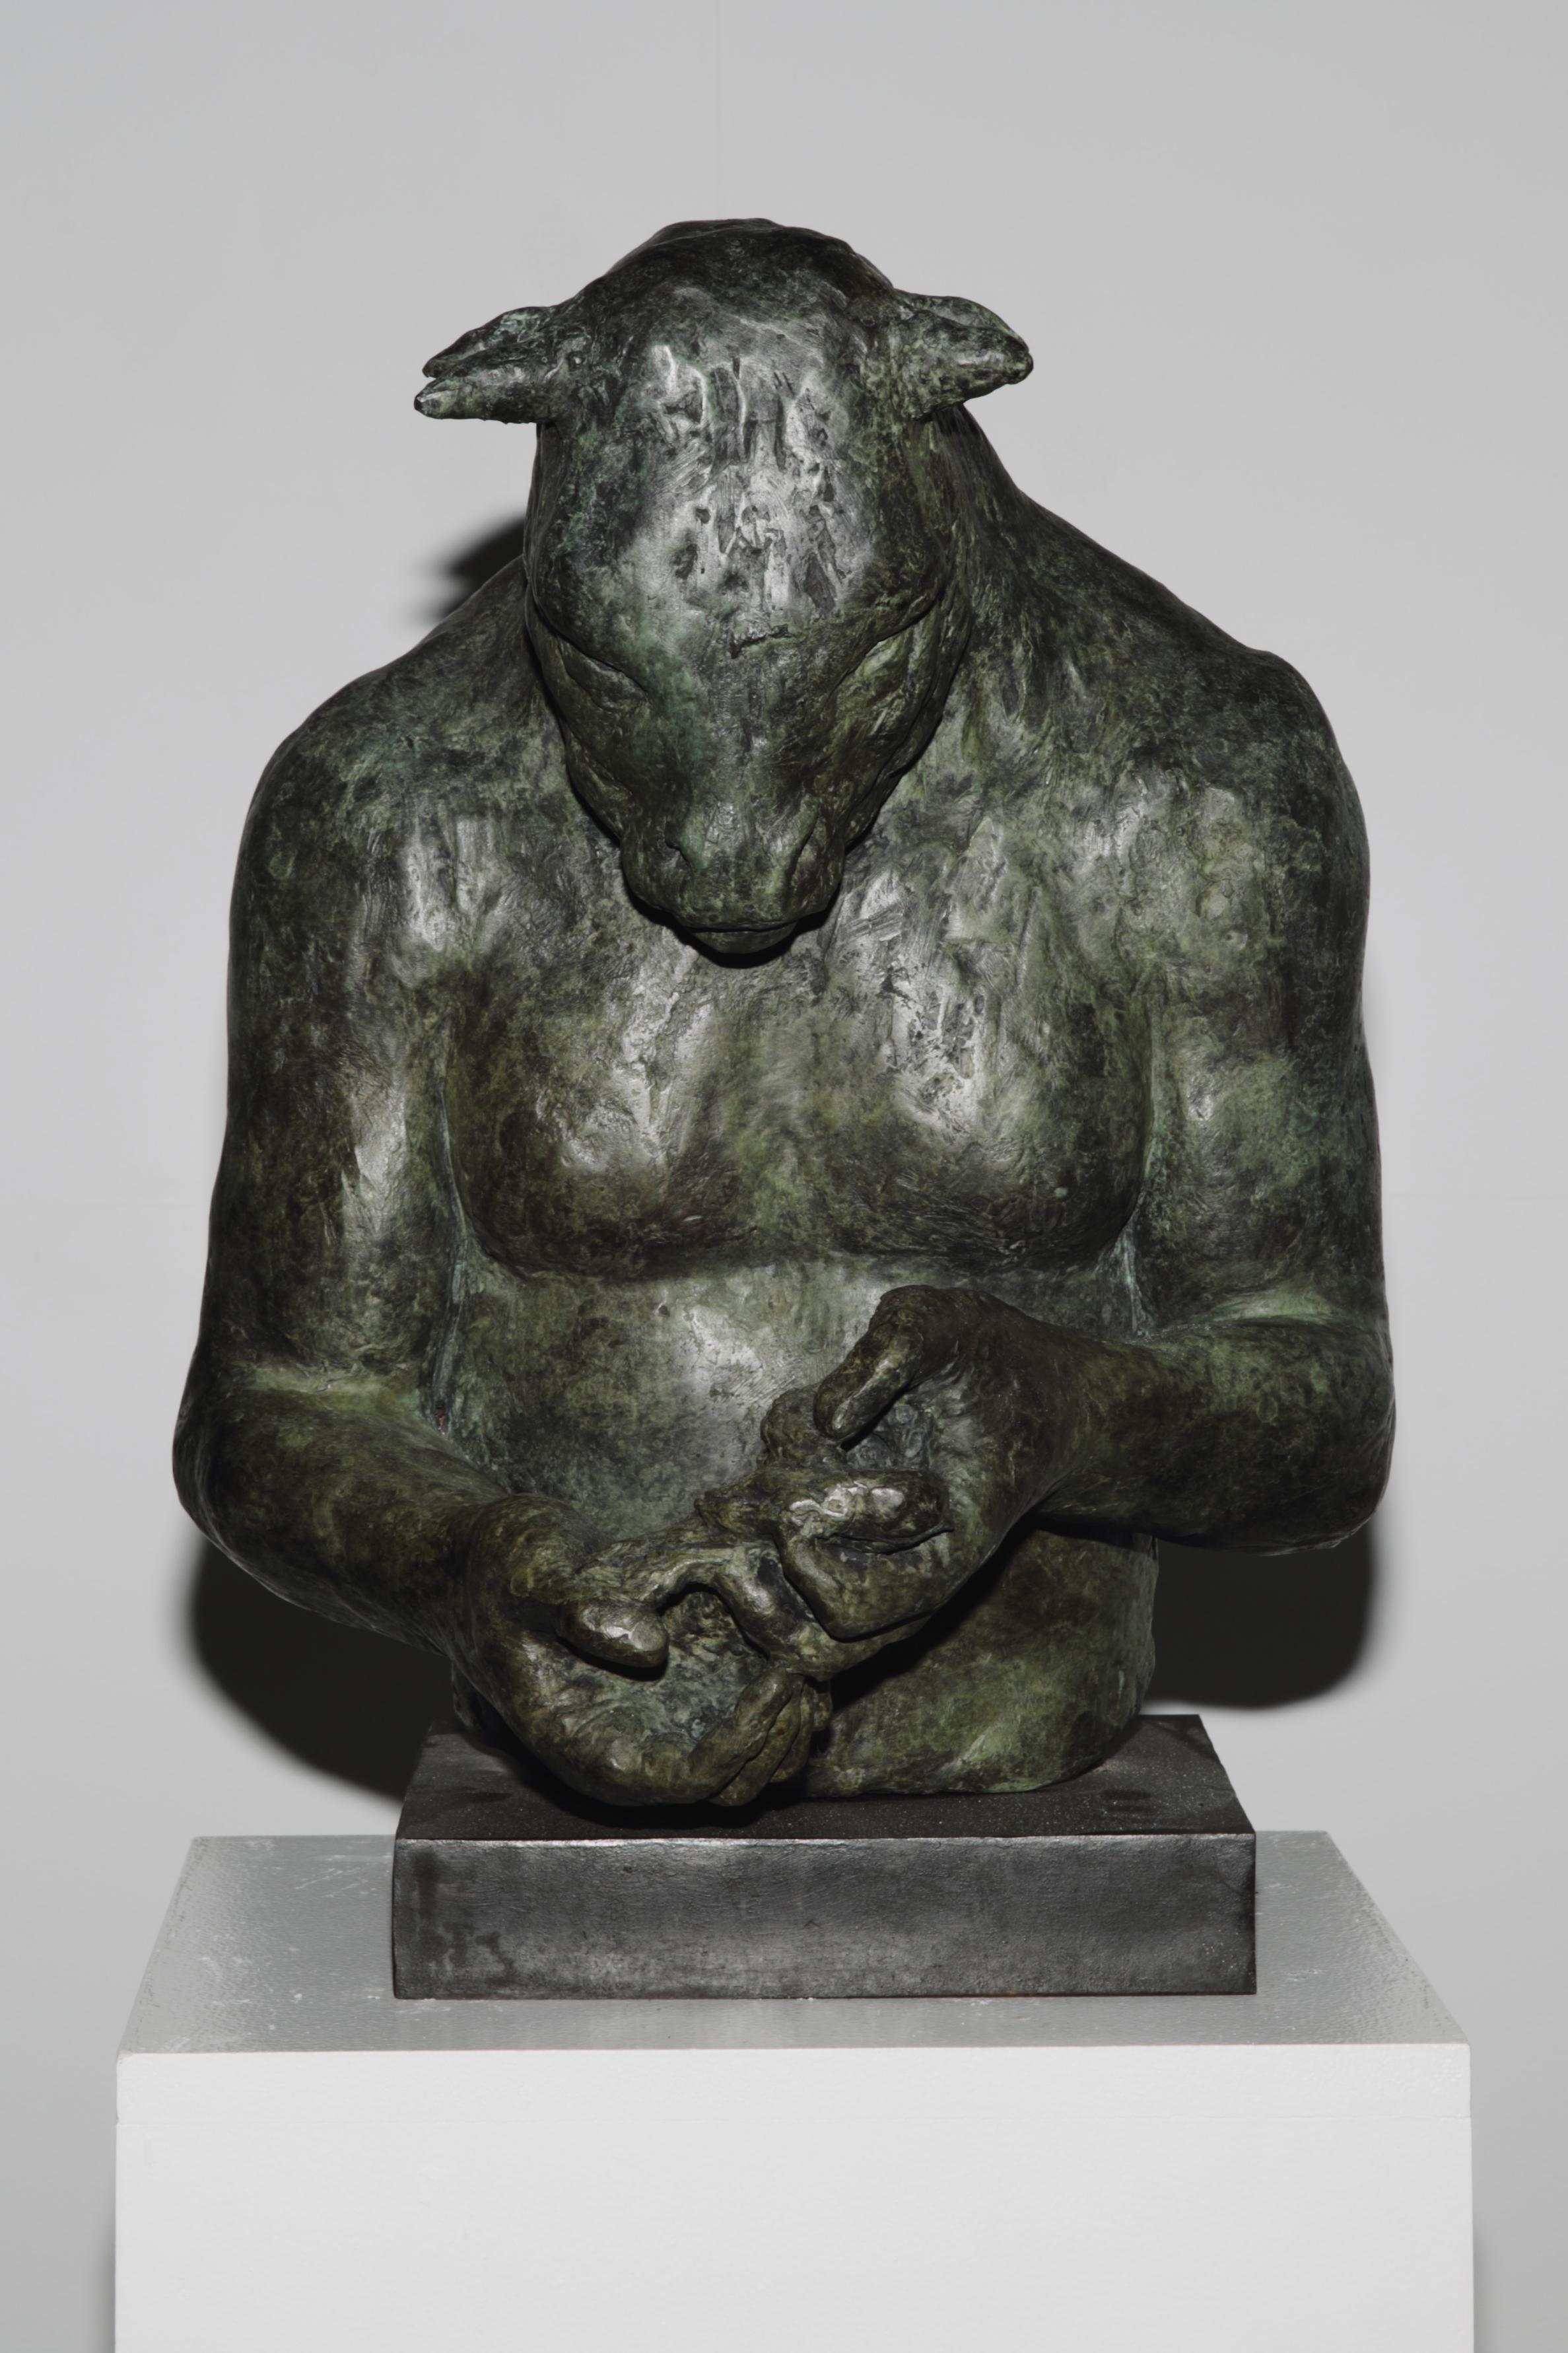 Beth Carter Figurative Sculpture - Large Minotaur Bust (with bird)